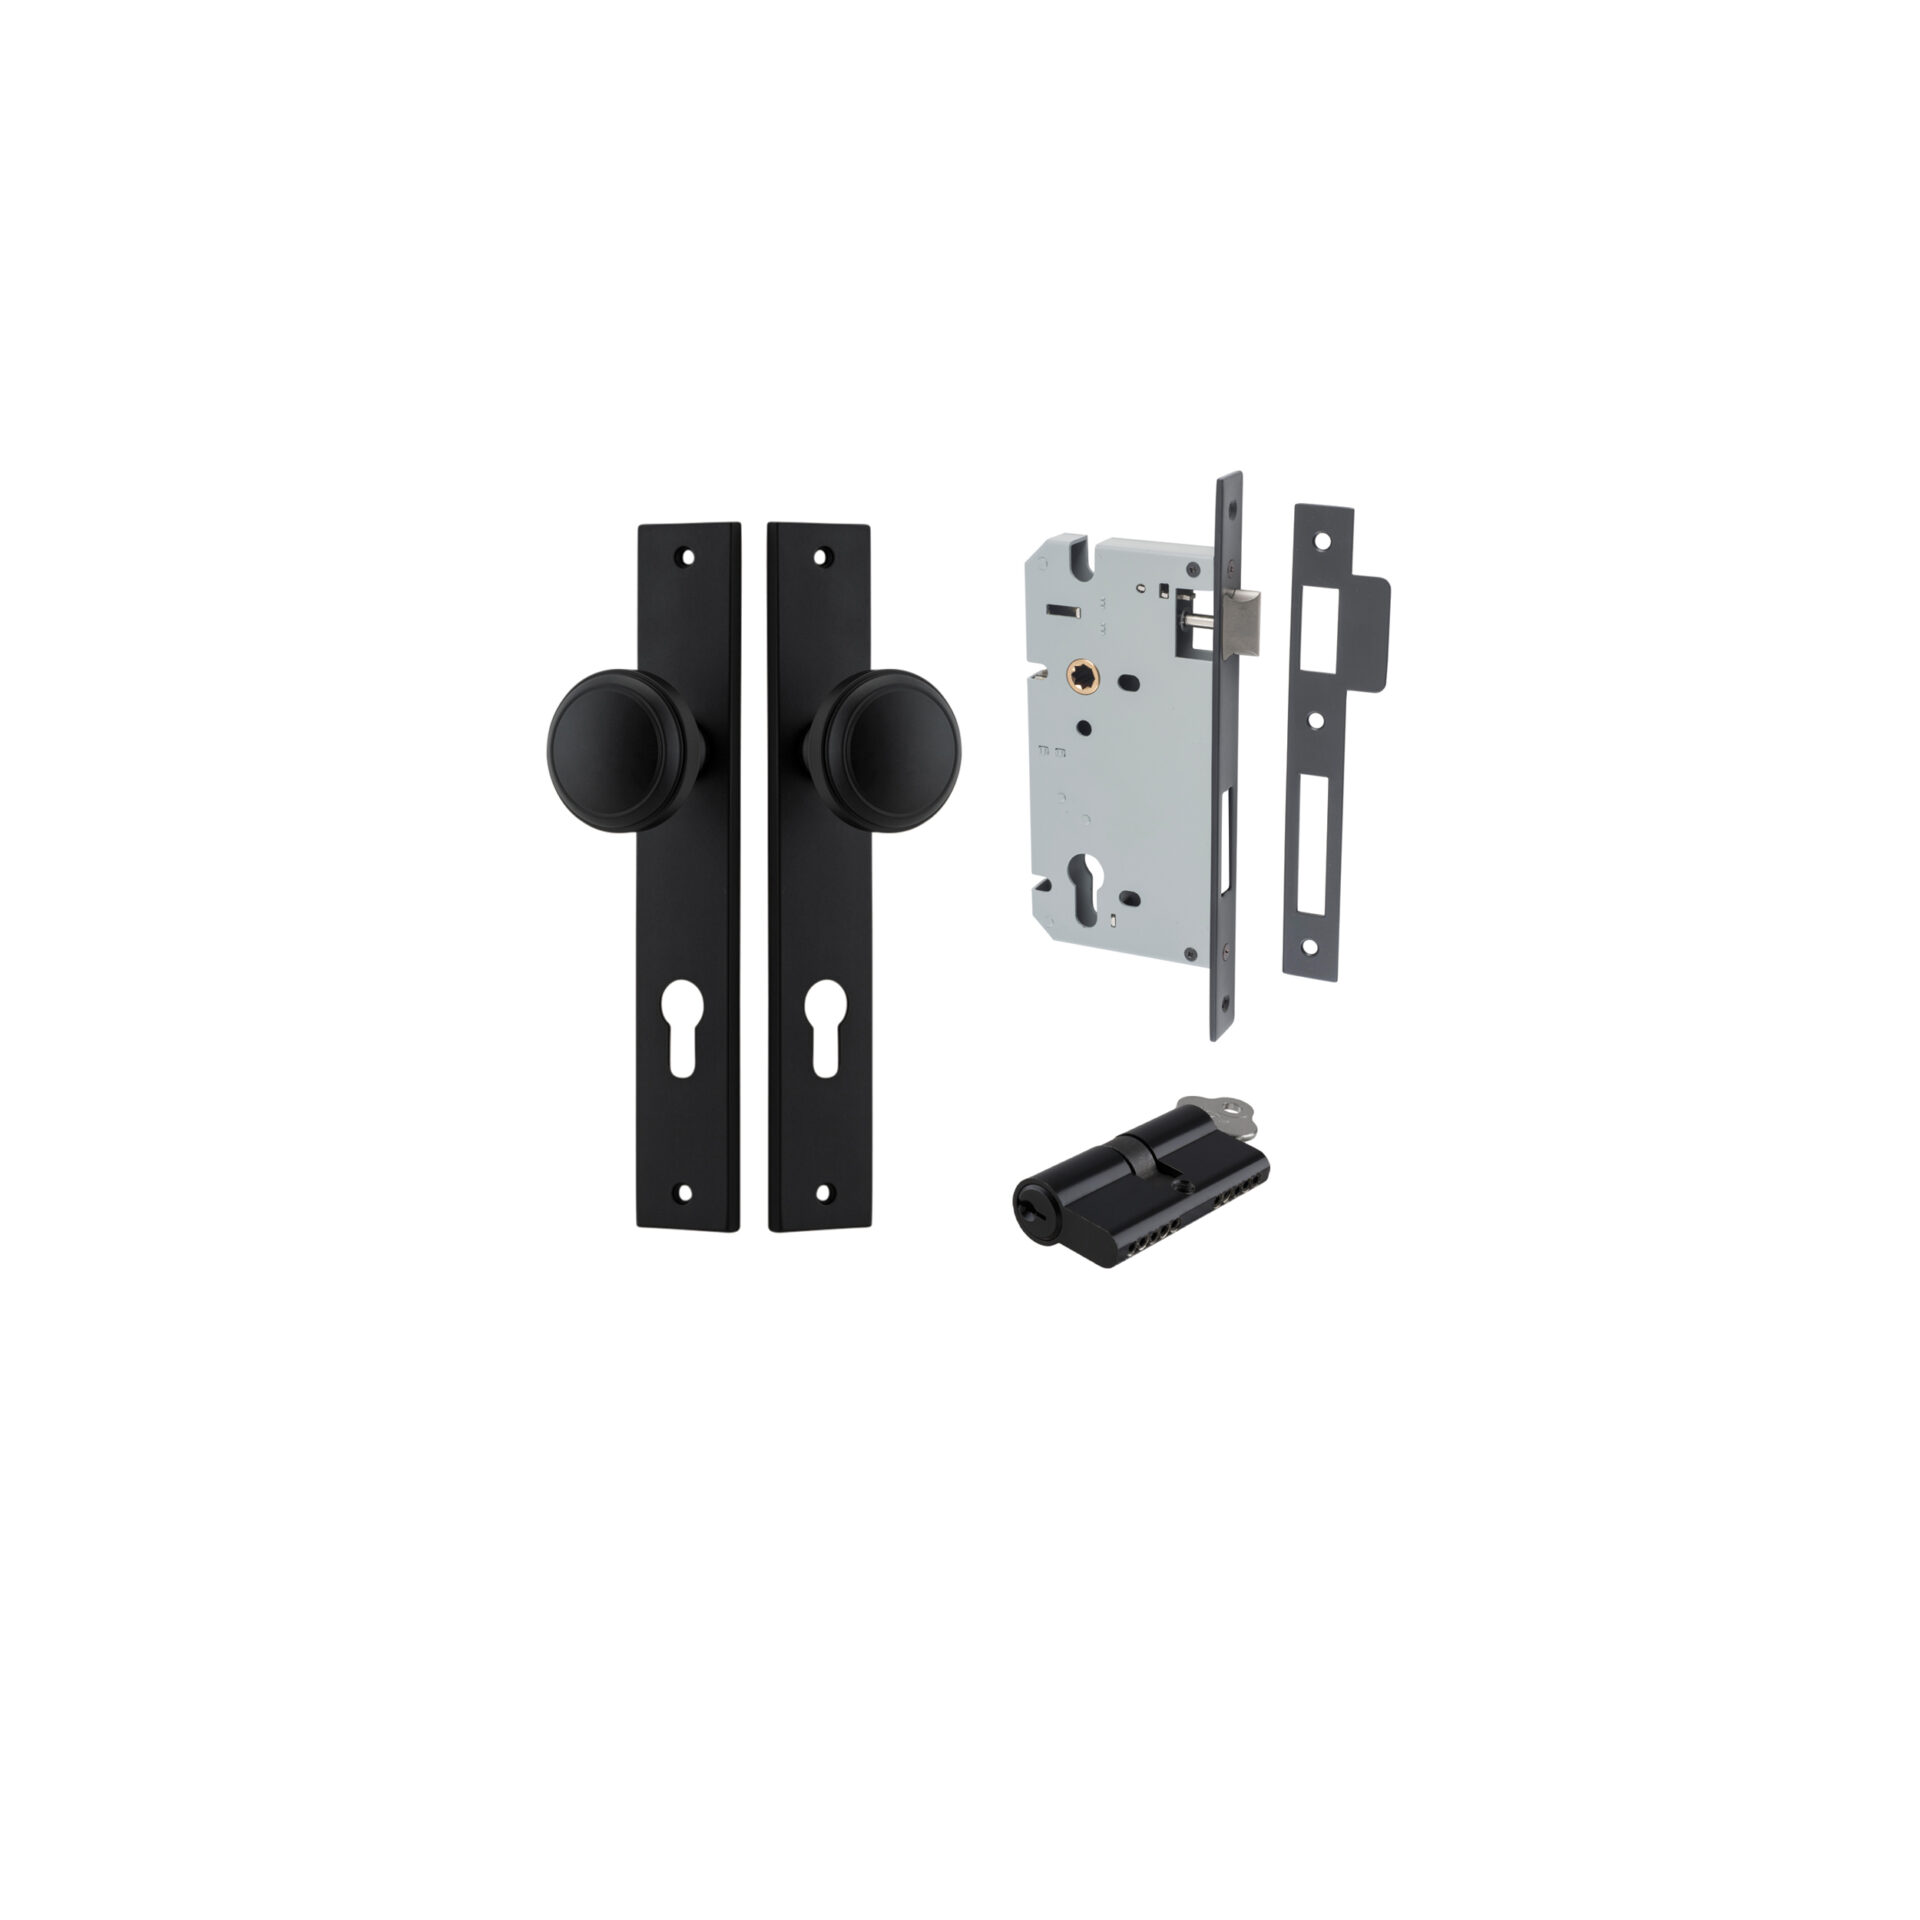 Paddington Knob - Rectangular Backplate Entrance Kit with High Security Lock